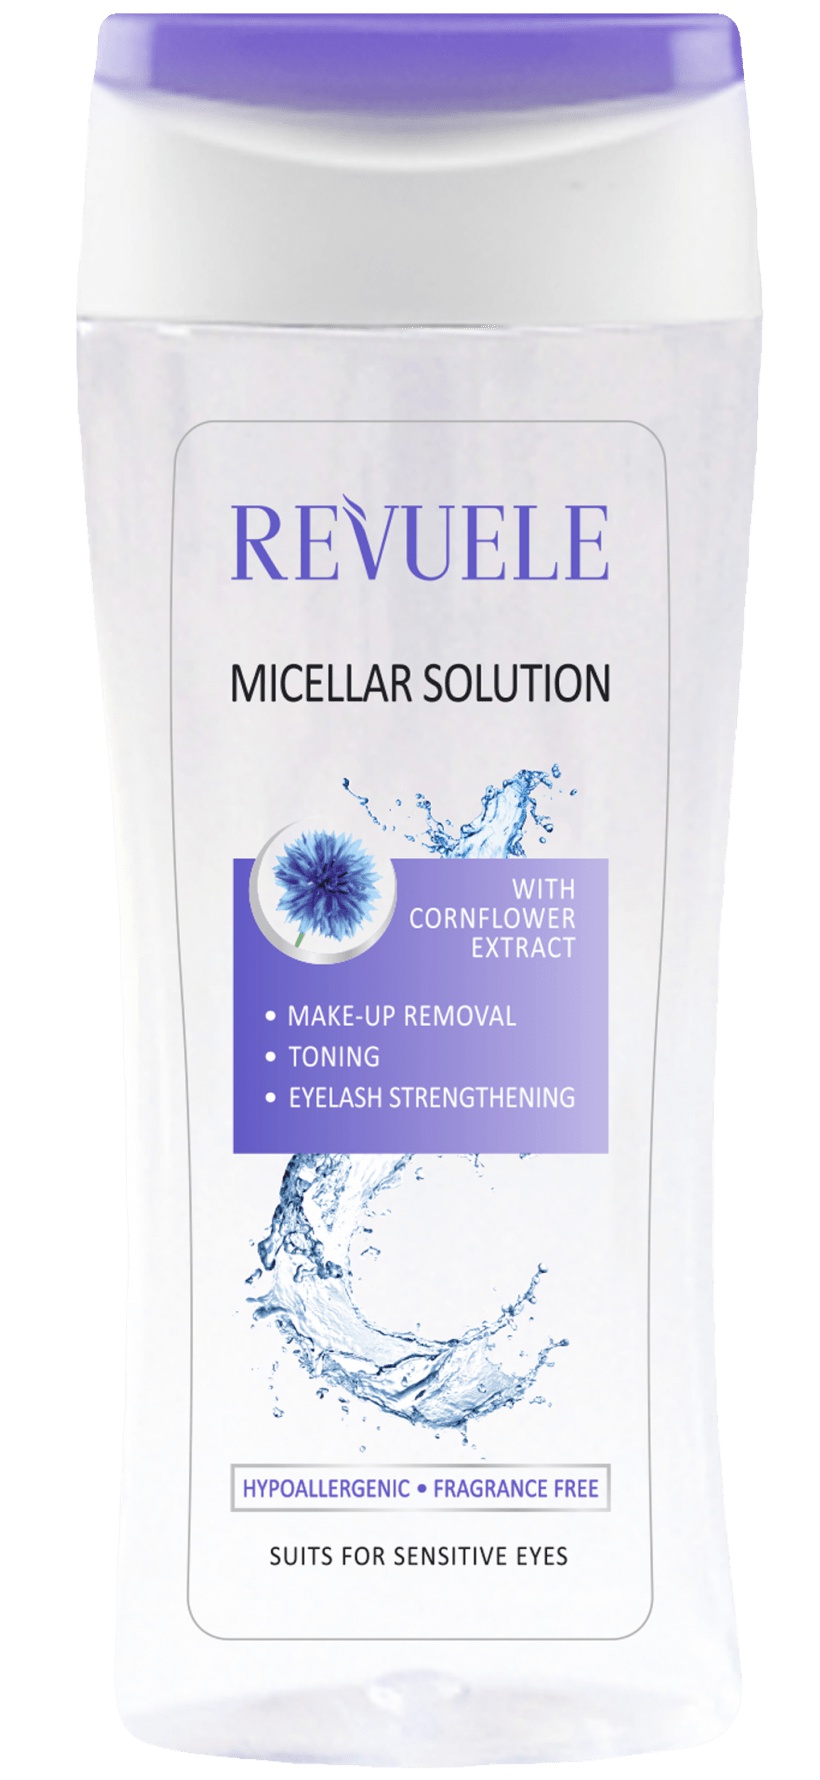 Revuele Micellar Solution For Sensitive Eyes